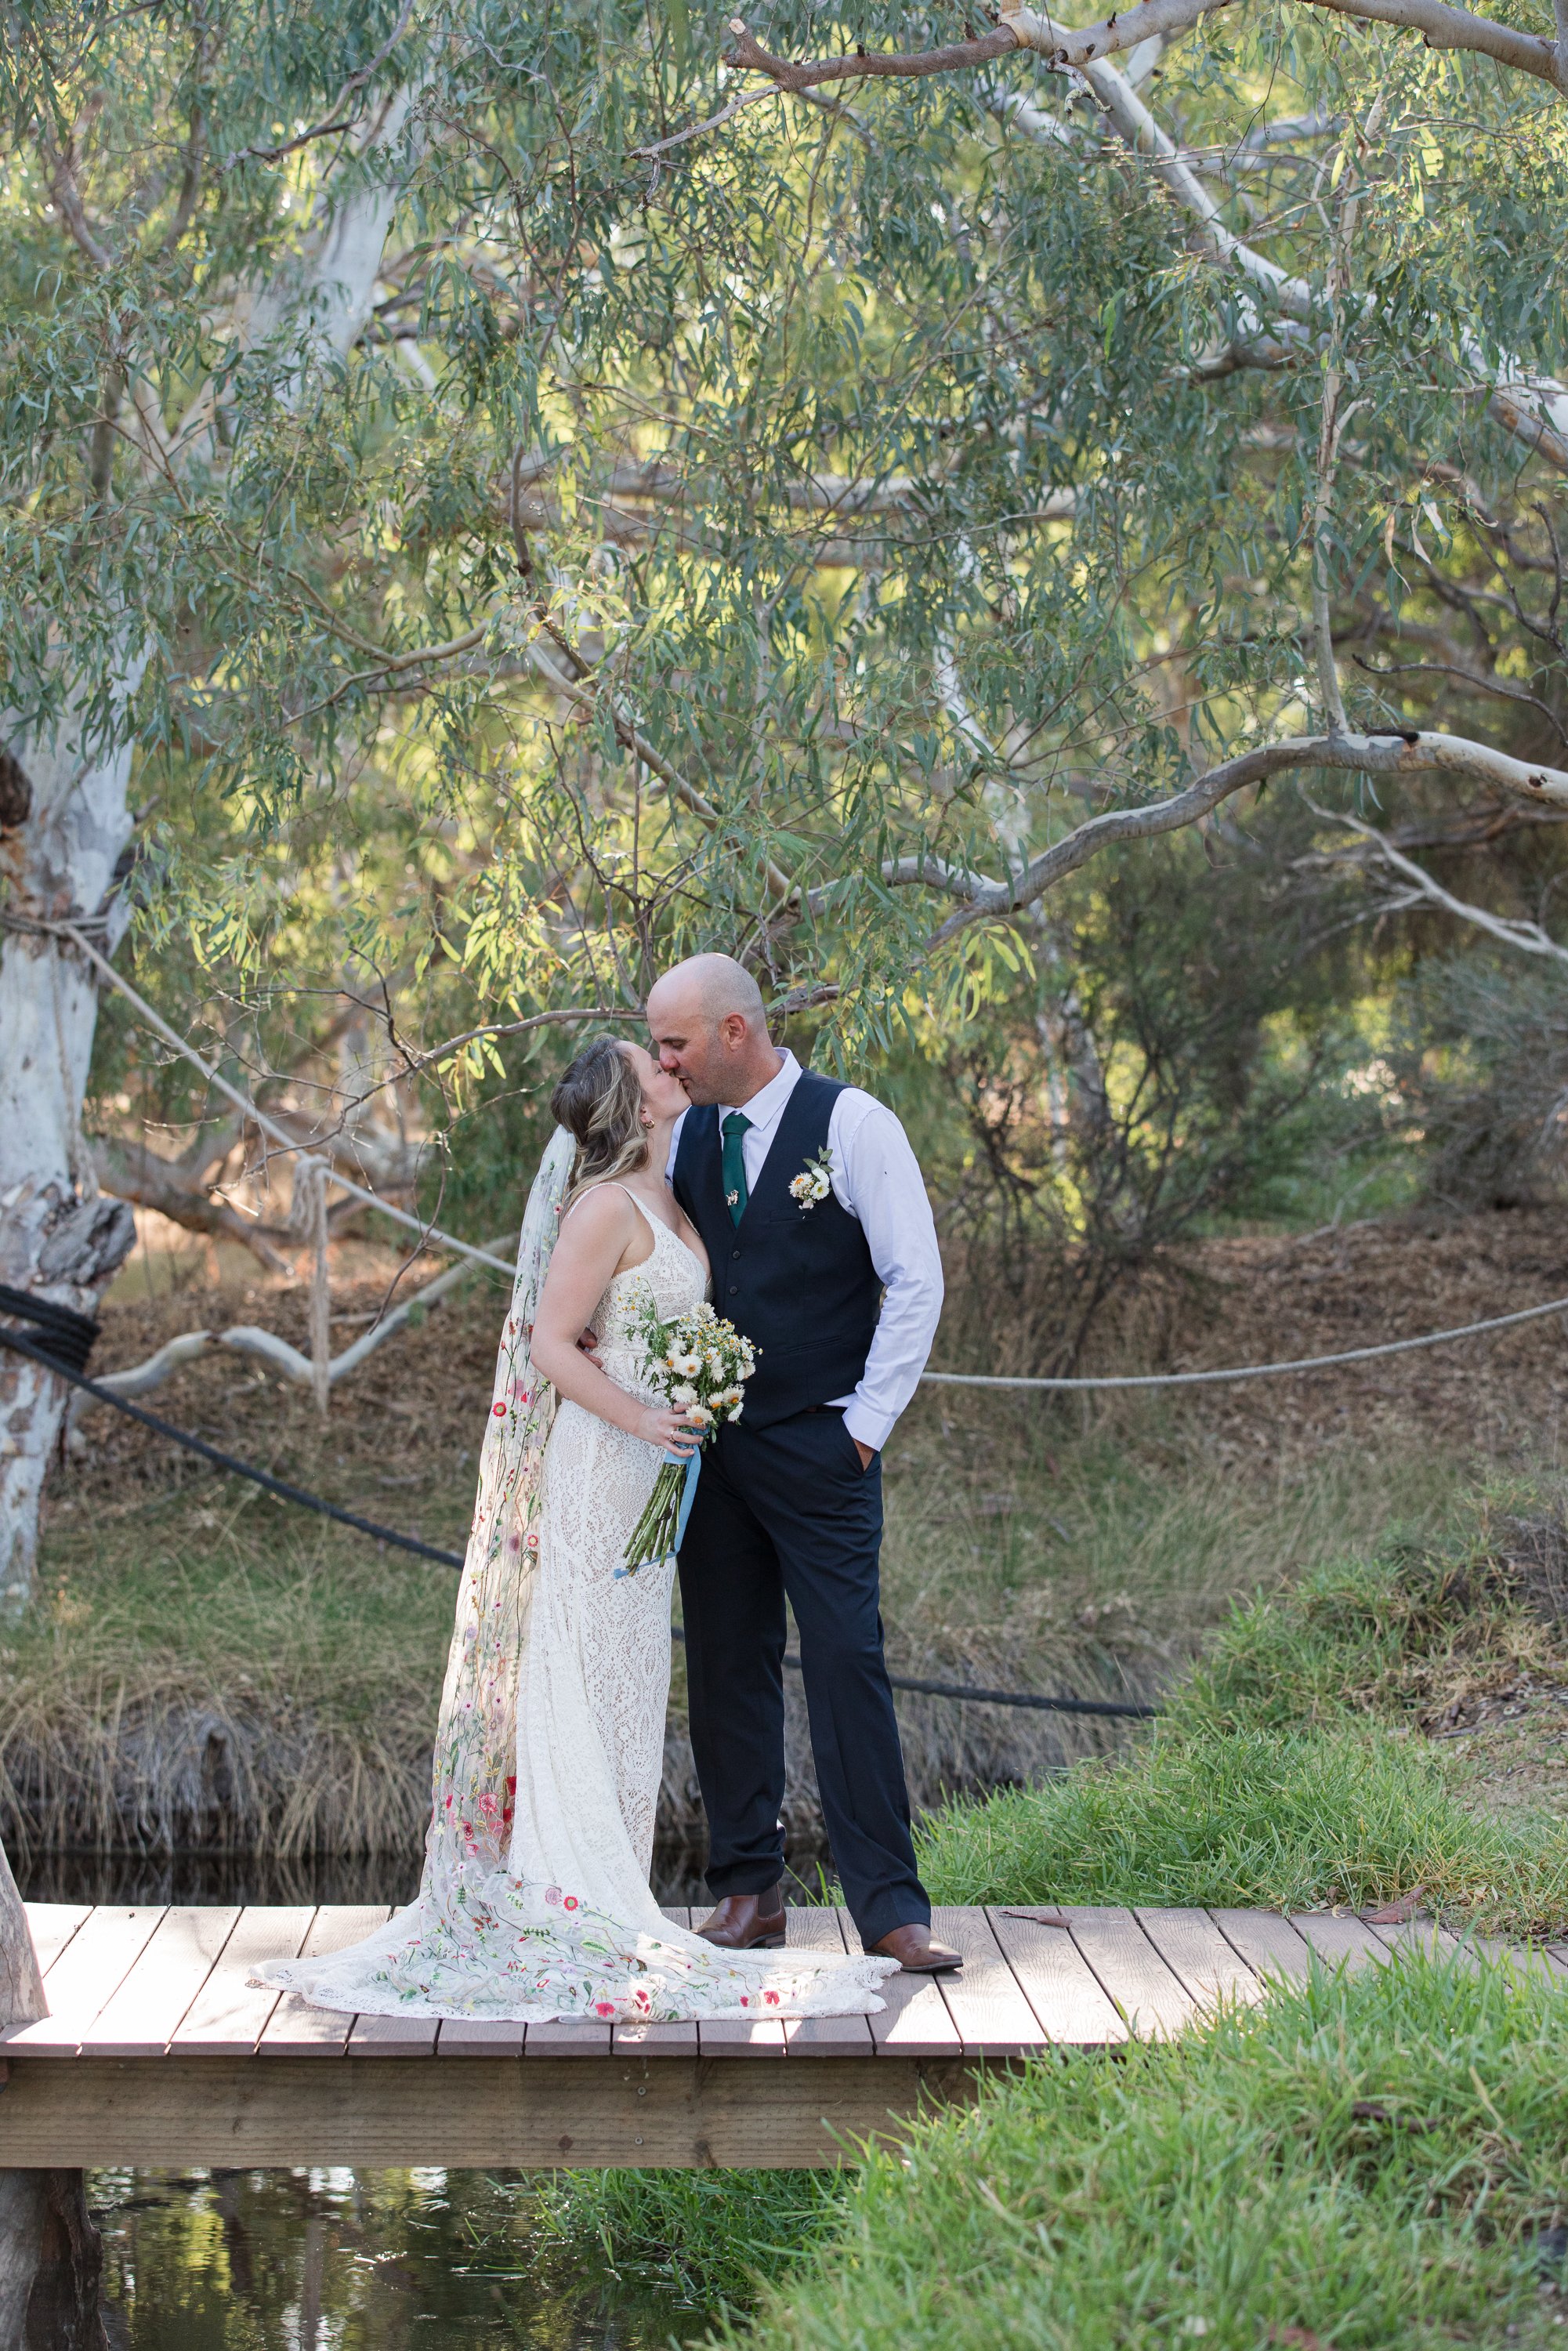 Briona & Daniel Nukara Farm Wedding - Michelle McKoy Photography 076A5051.jpg